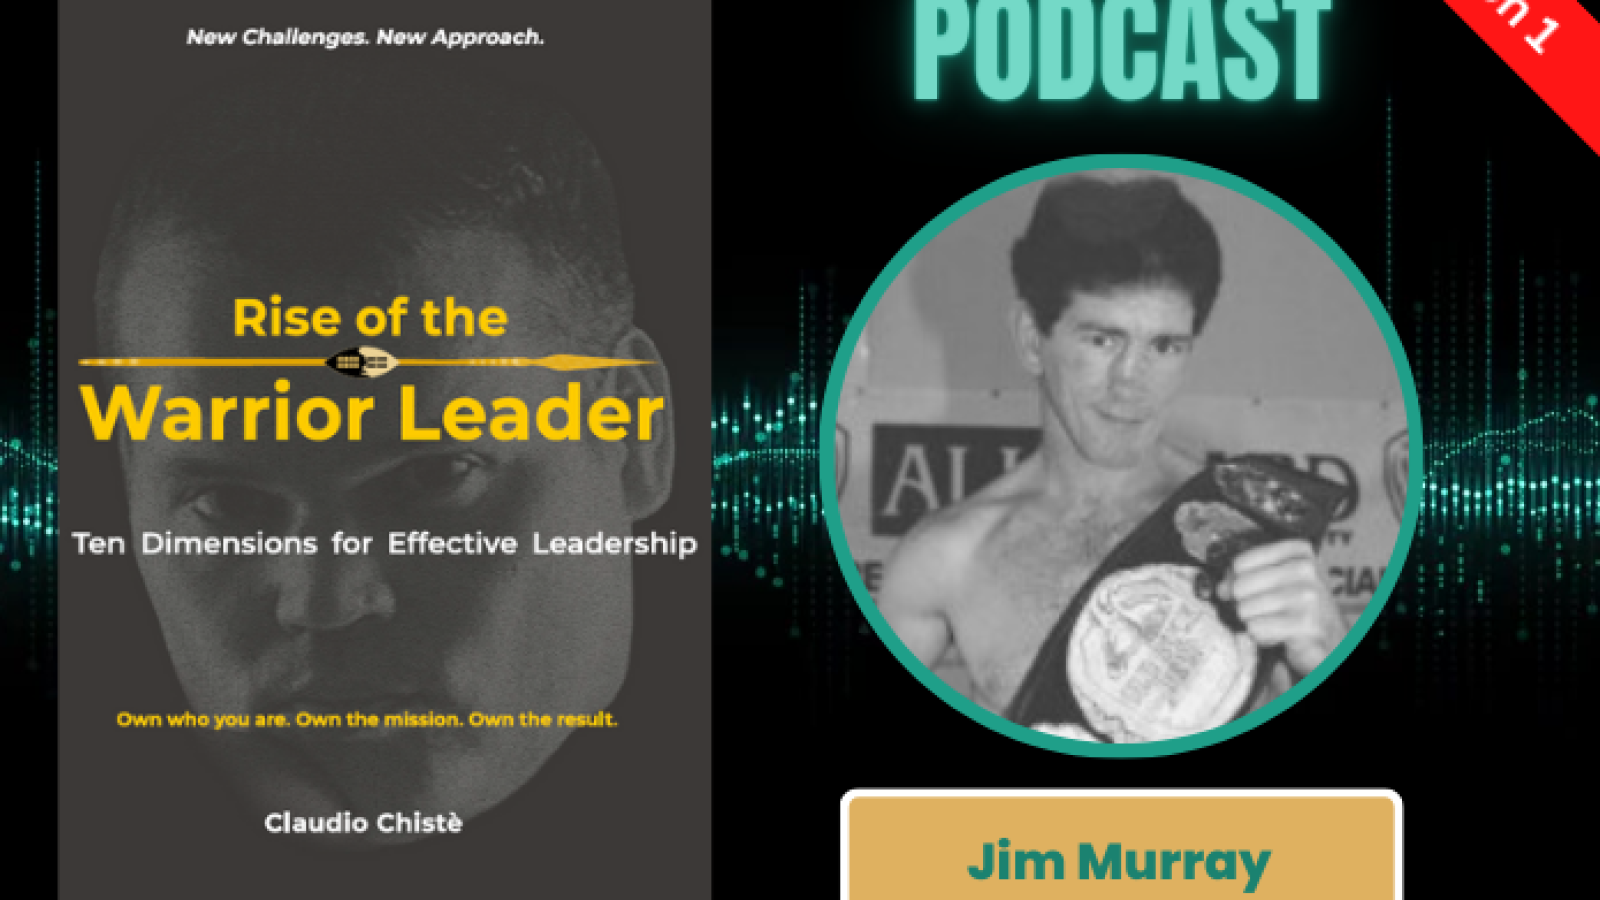 Podcast: Jim Murray